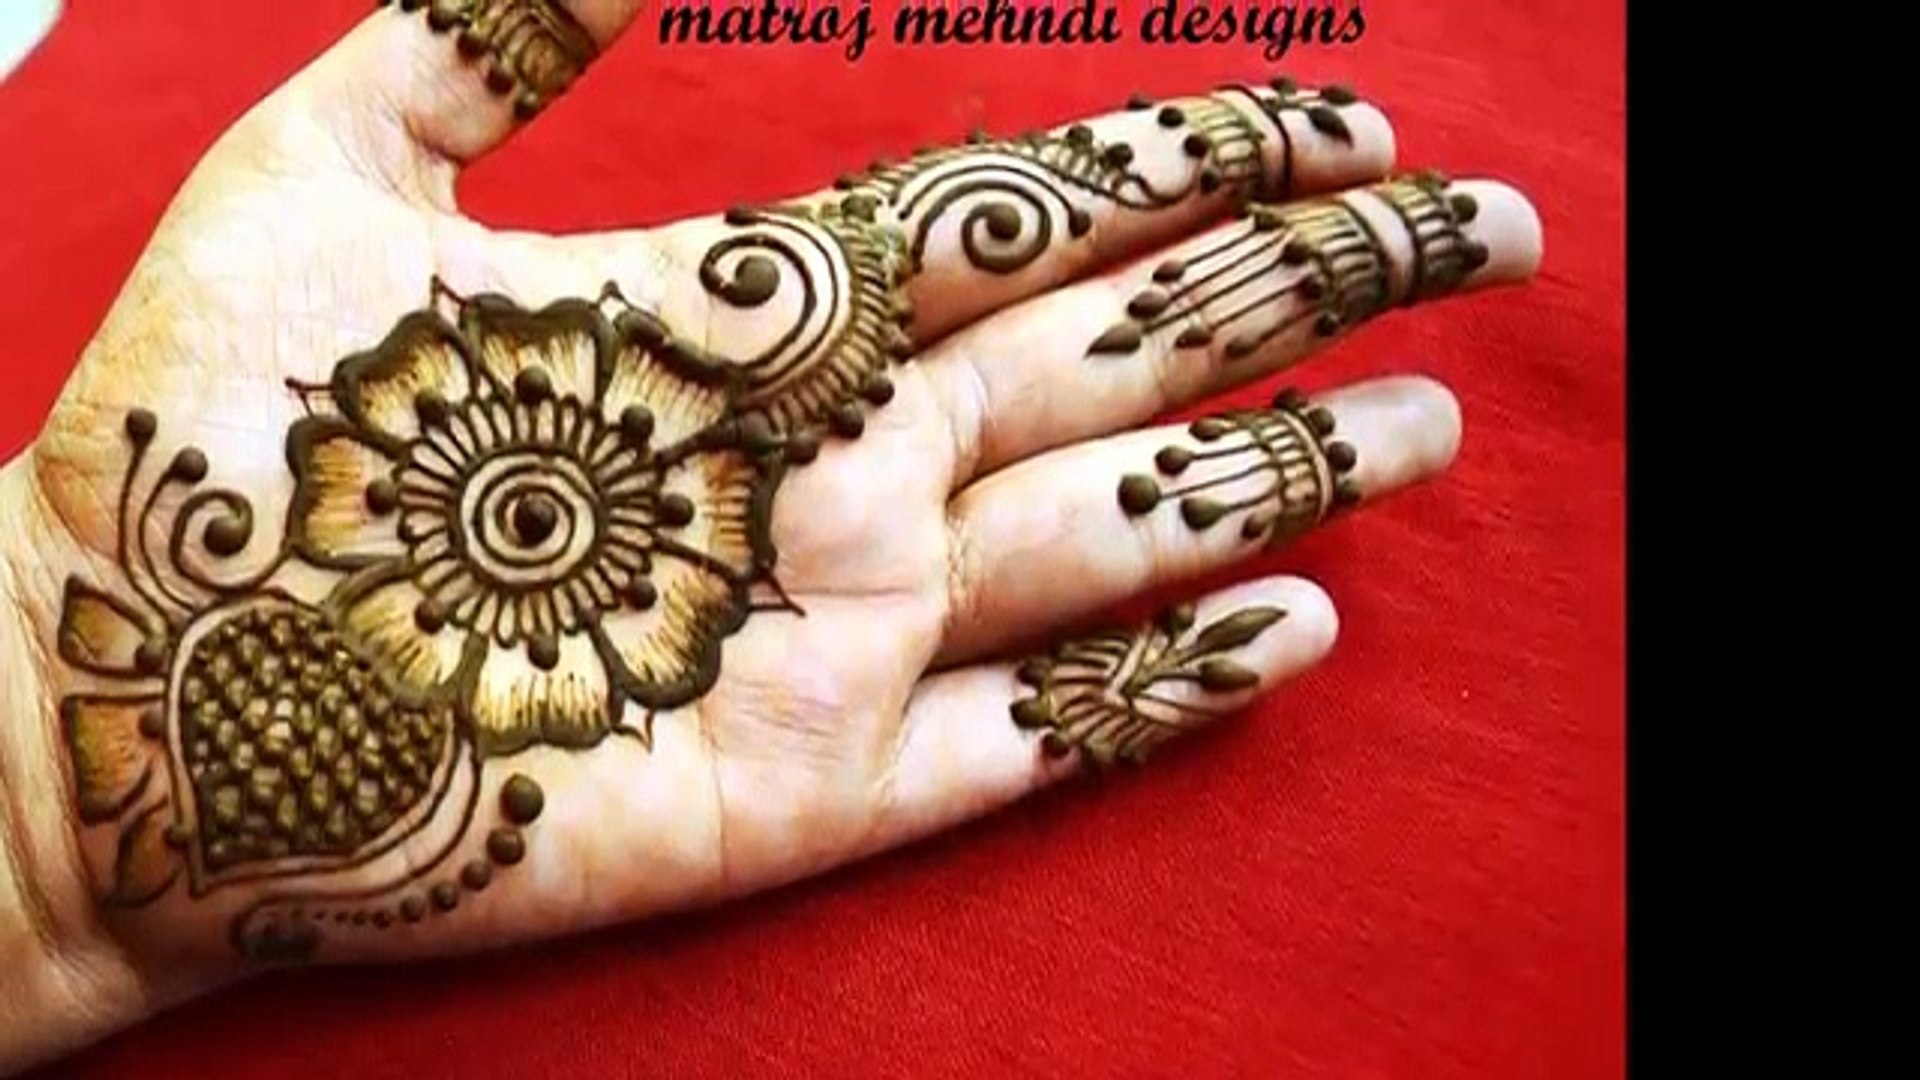 Easy Mehndi Designs For Hands Mehndi Designs For Marriages Matroj